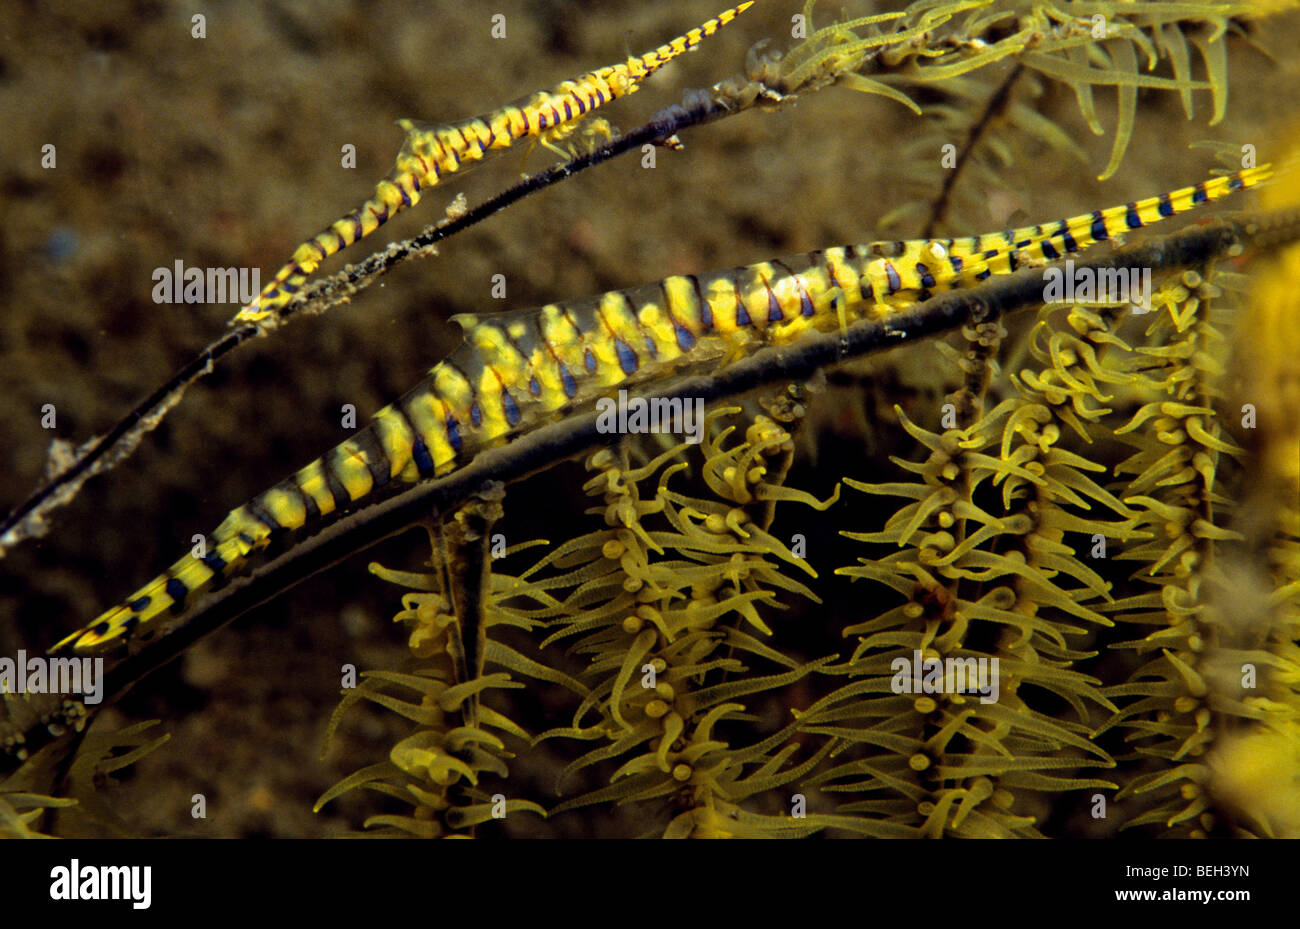 Coral Blade Shrimp on Black Coral, Tozeuma armatum, Manado, Sulawesi, Indonesia Stock Photo